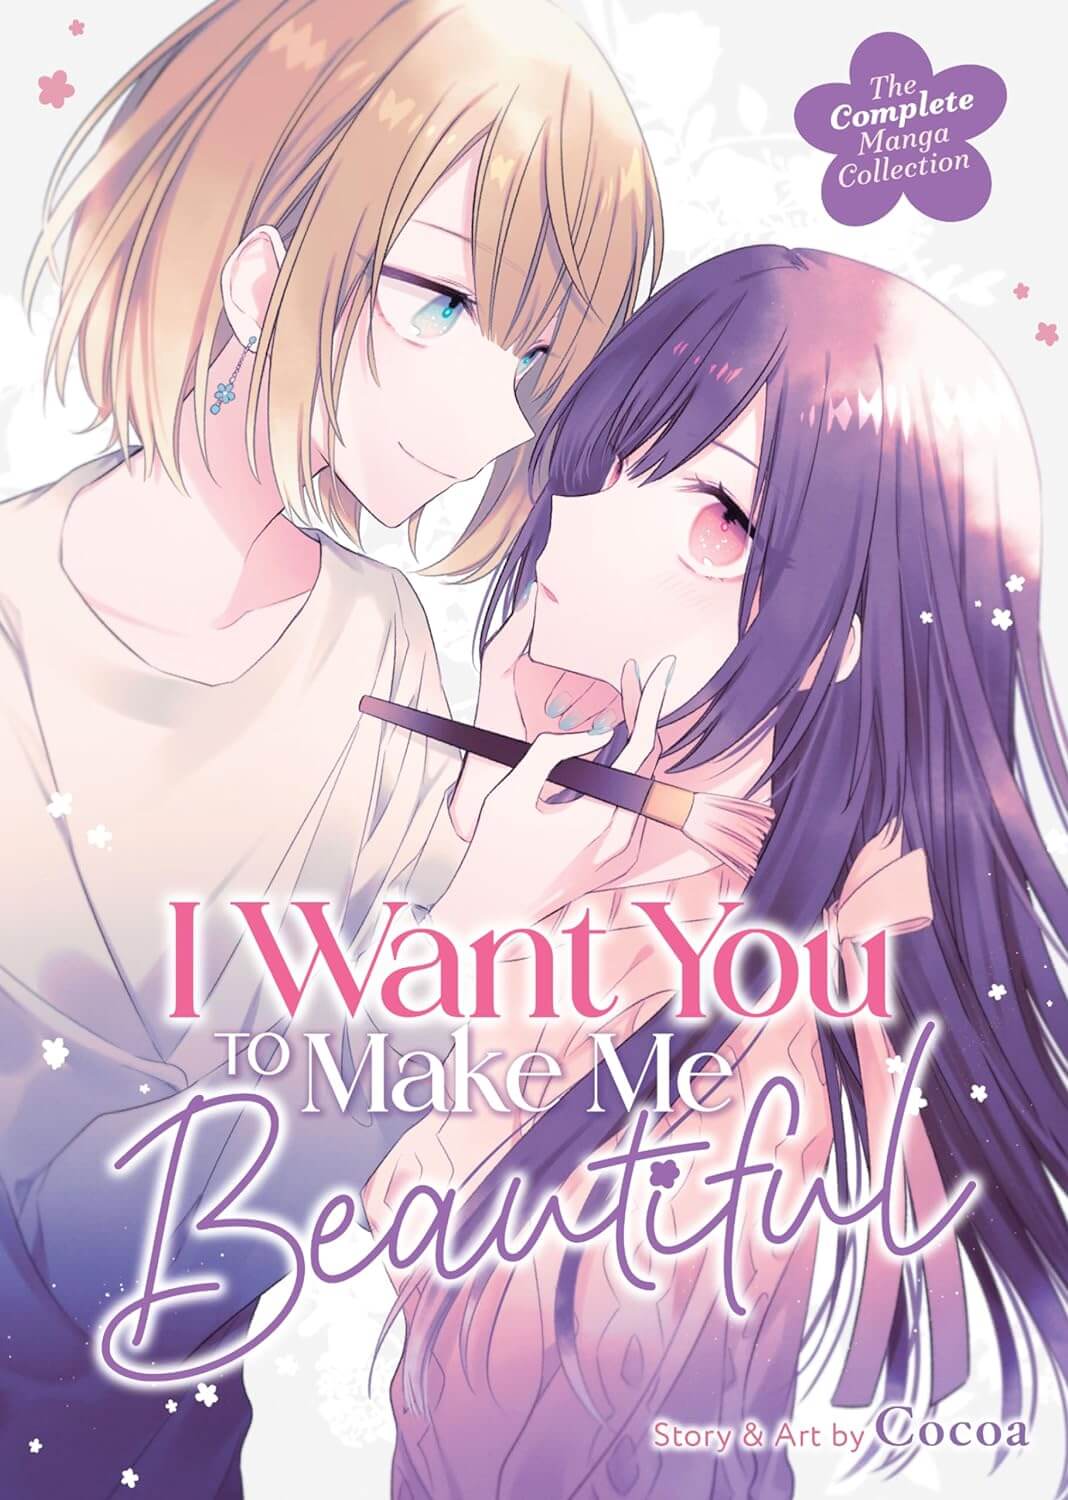 I want you to make me beautiful manga cover. Yuzuki holding a makeup brush and caressing Kanna's cheek.